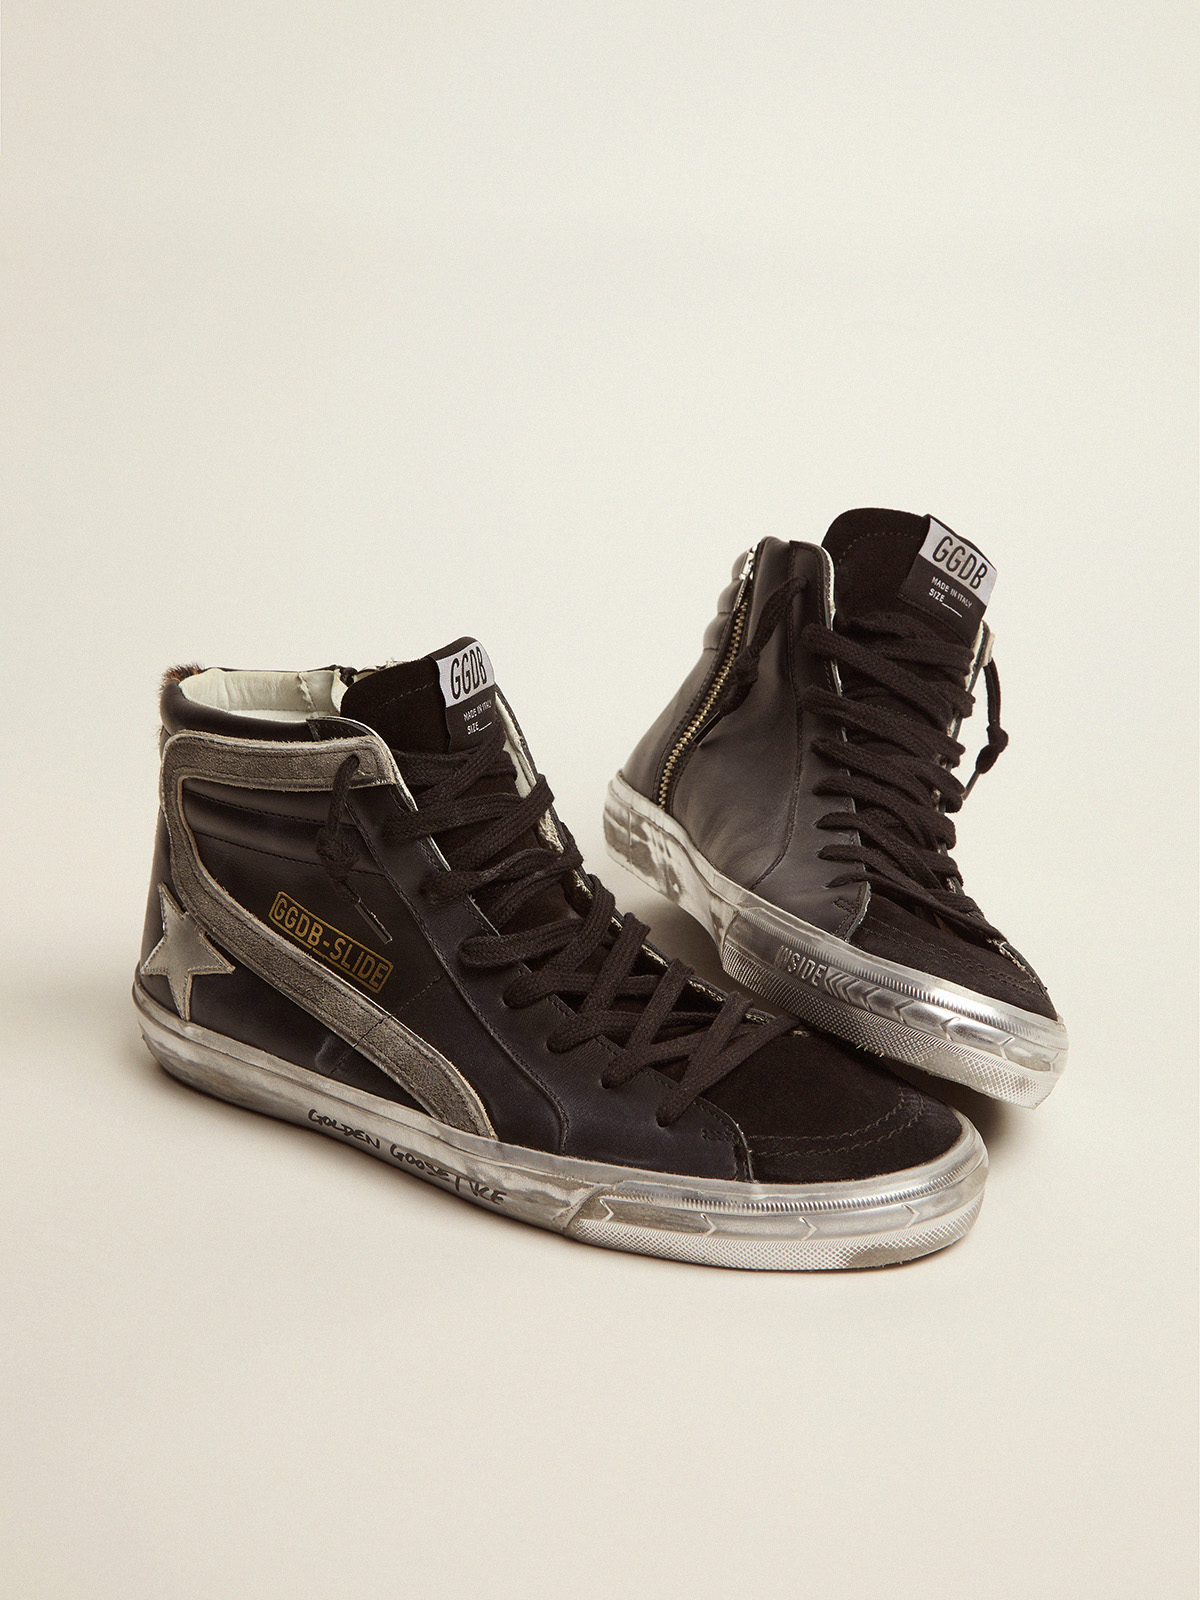 Slide sneakers in black leather with leopard-print pony skin heel tab |  Golden Goose